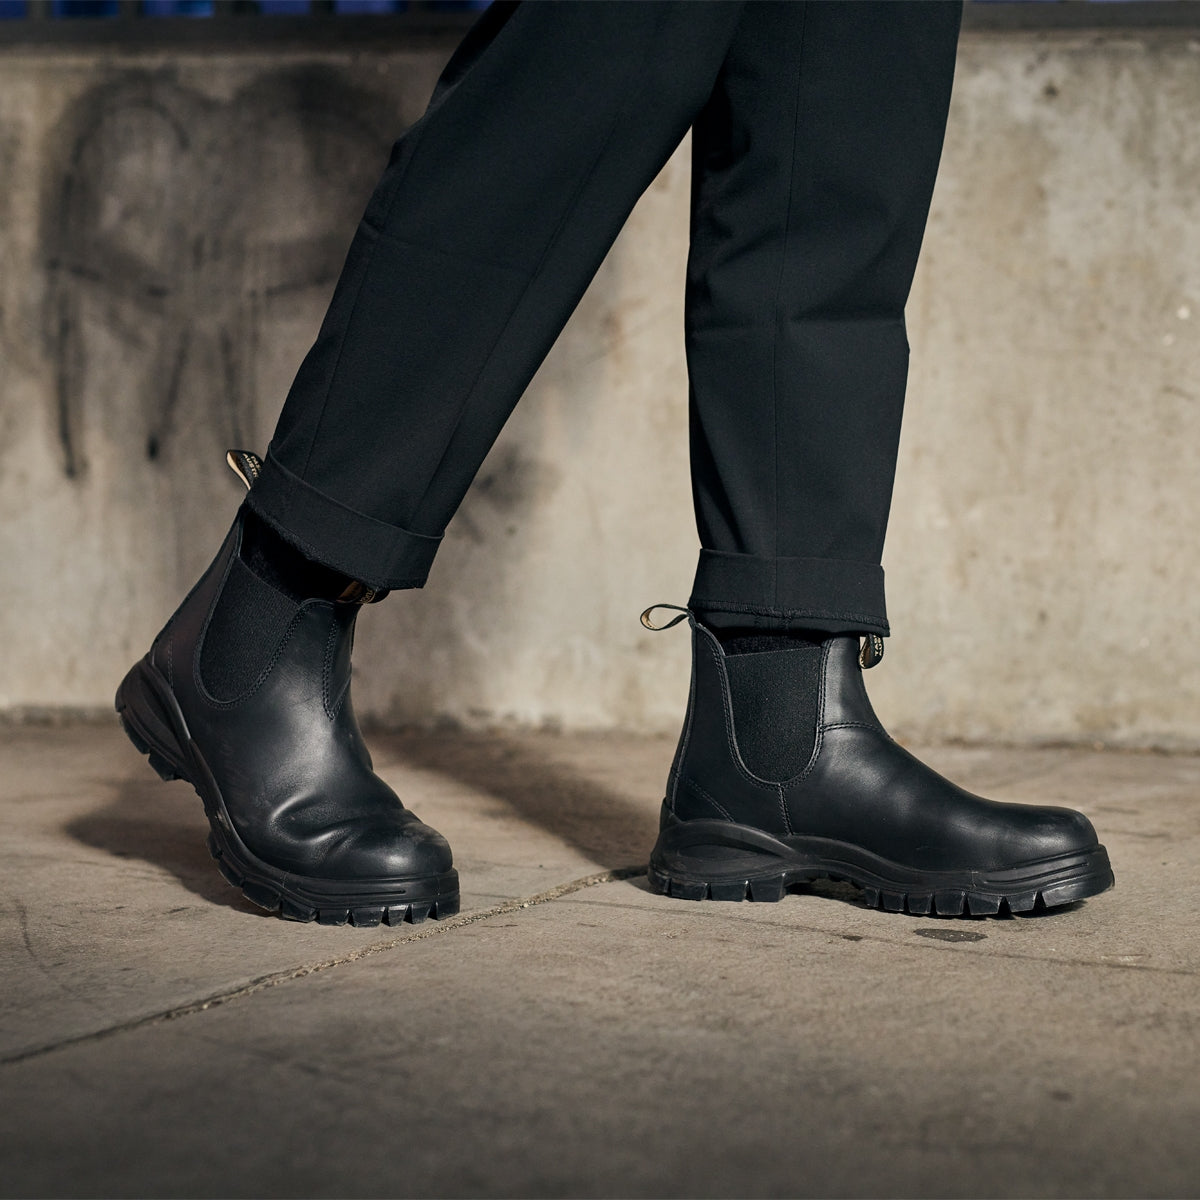 Blundstone Lug 2240 Chelsea Boots is Black | Footprint USA